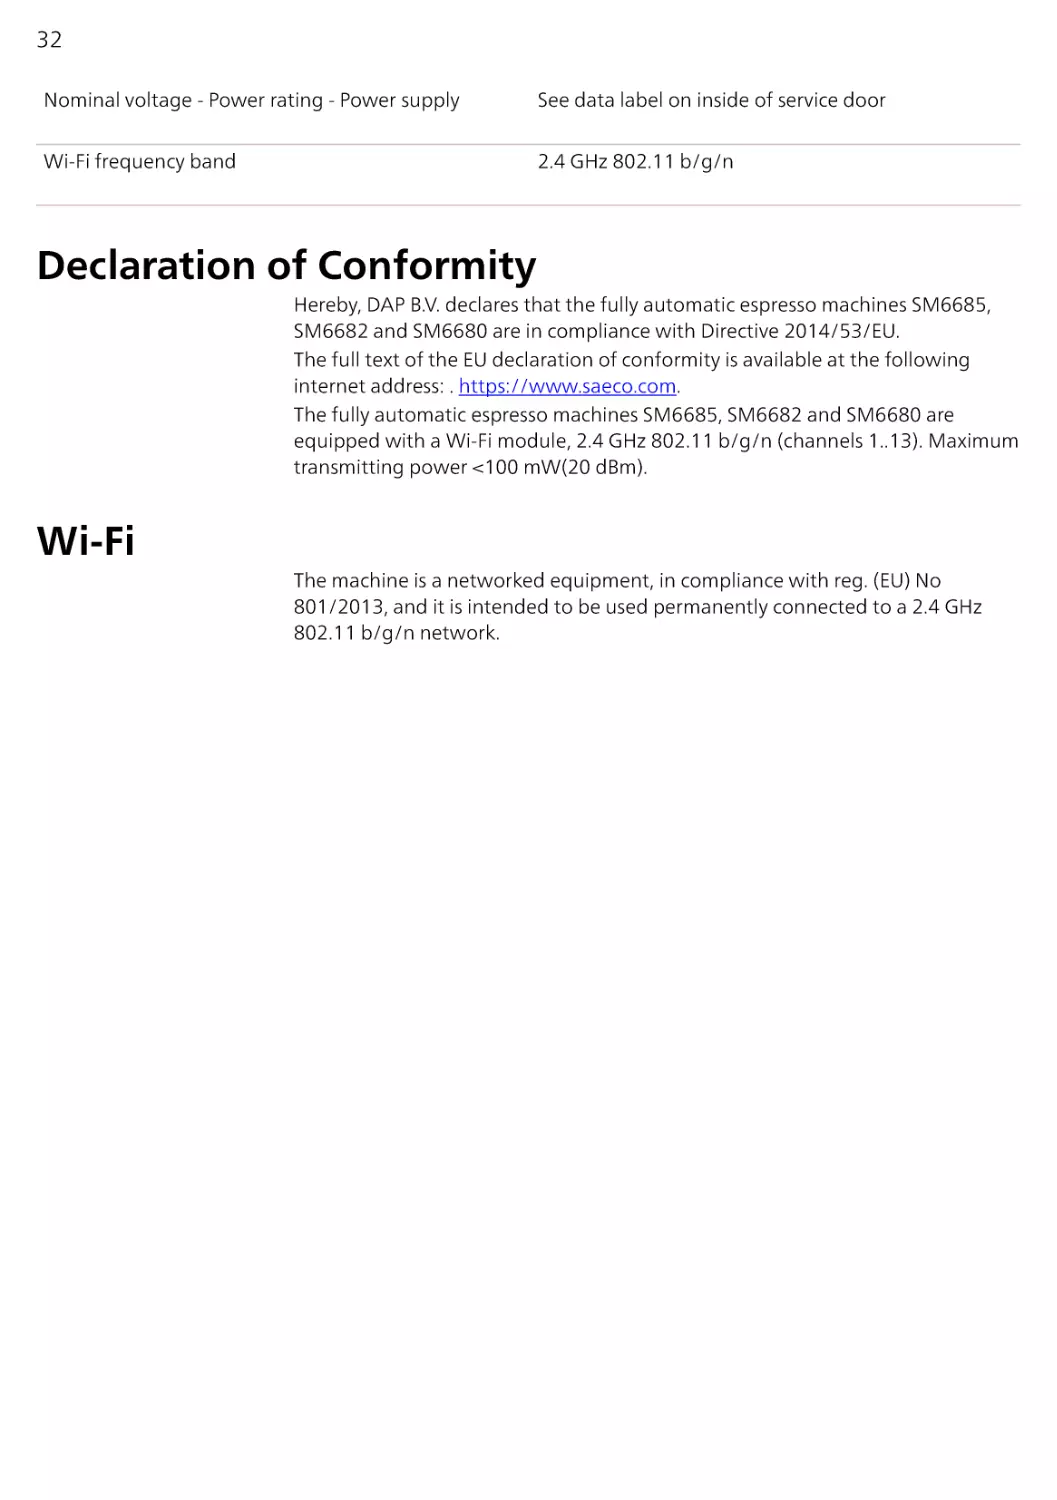 Declaration of Conformity
Wi-Fi